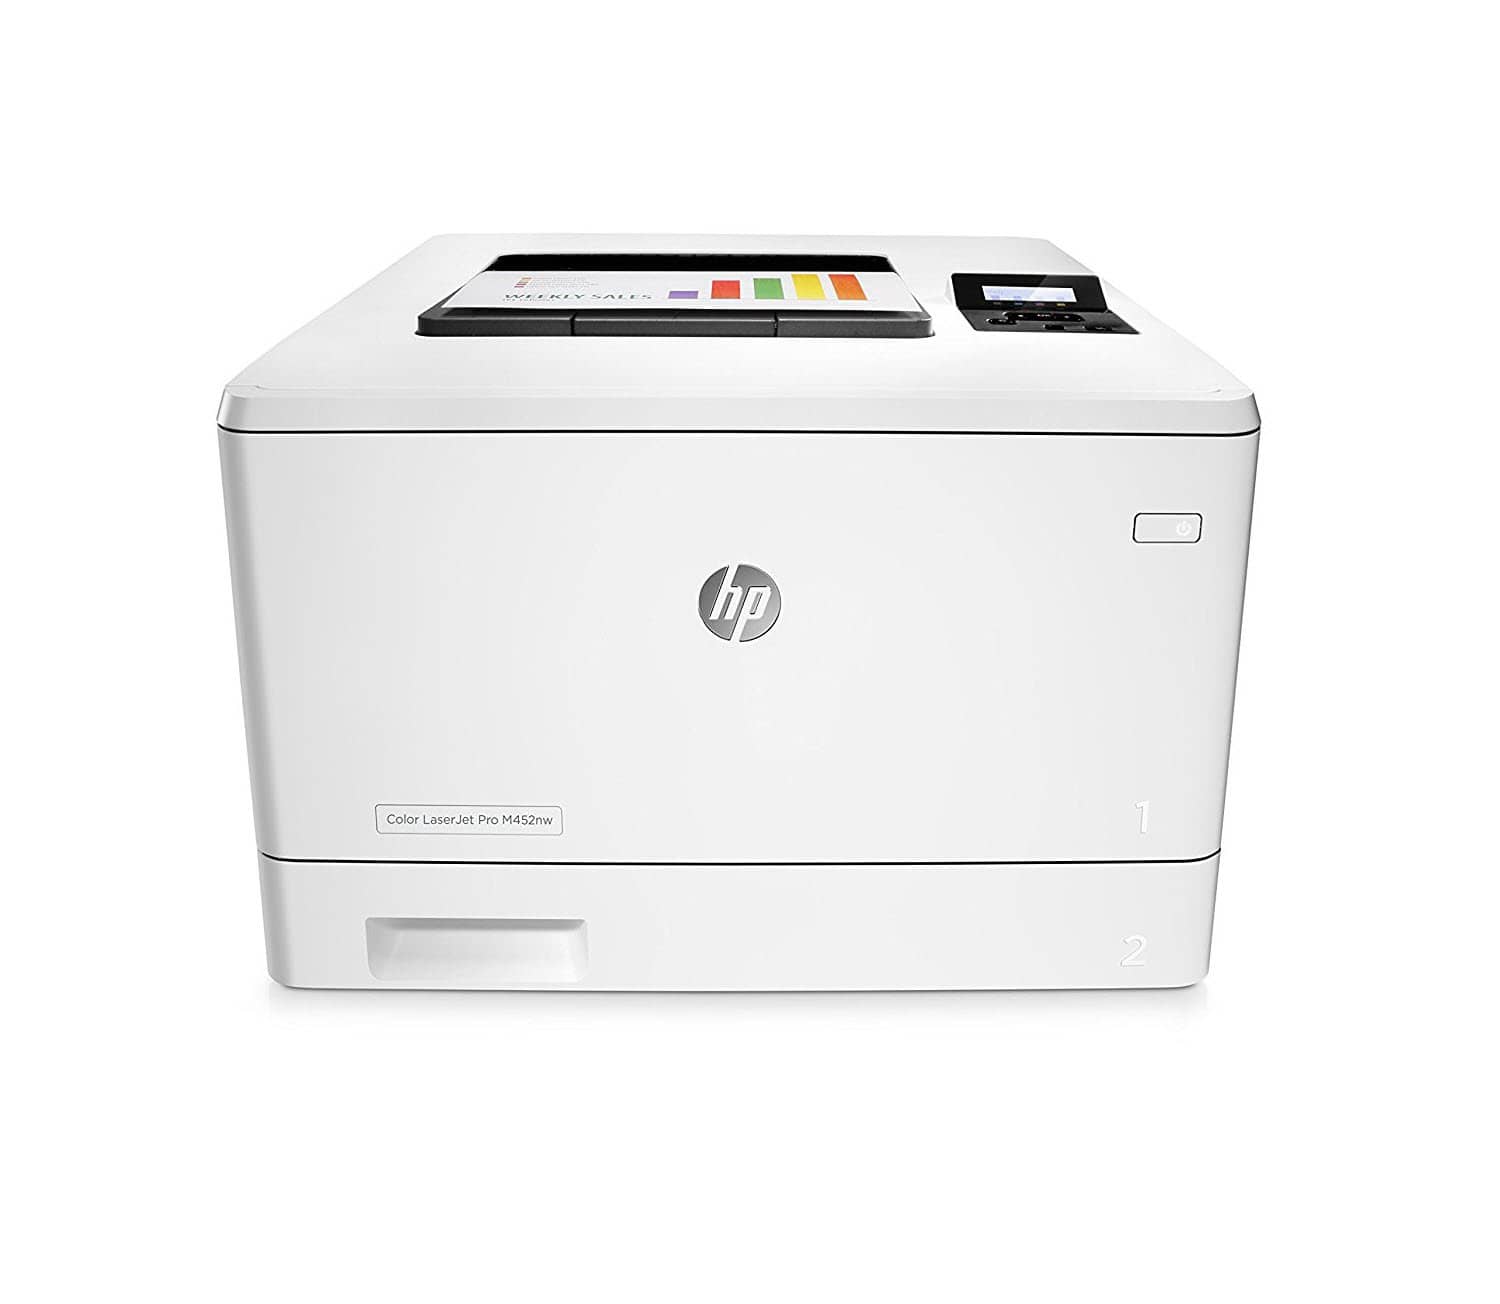 HP Laserjet Pro M452nw Wireless Color Printer